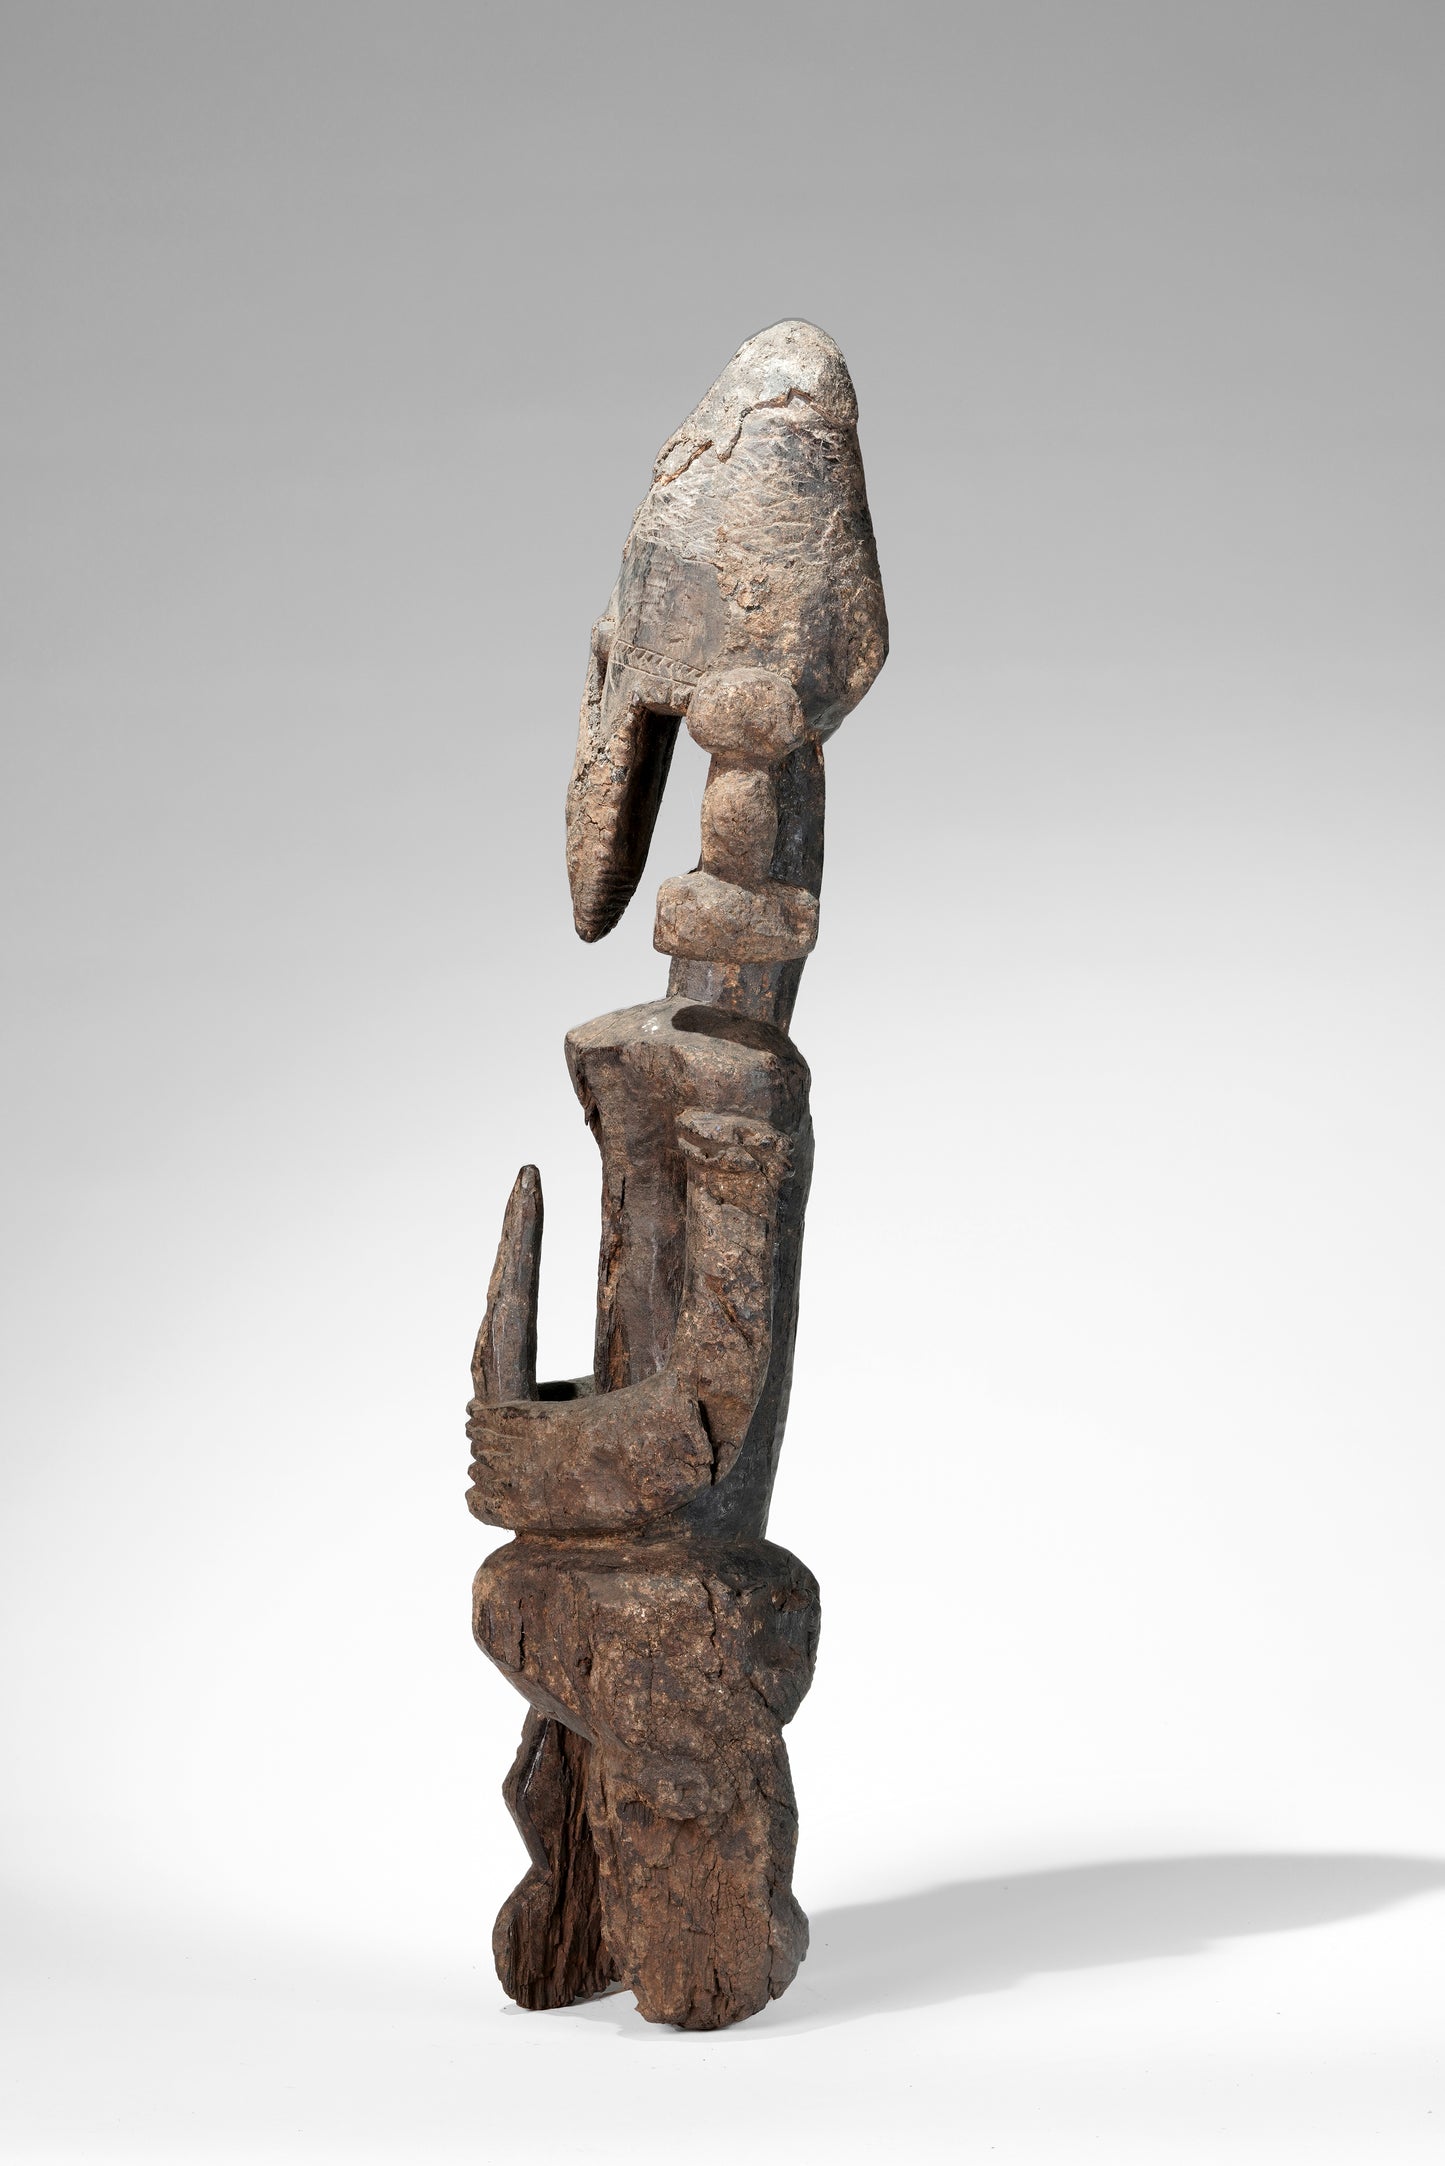 A high-aged male Jukun sculpture